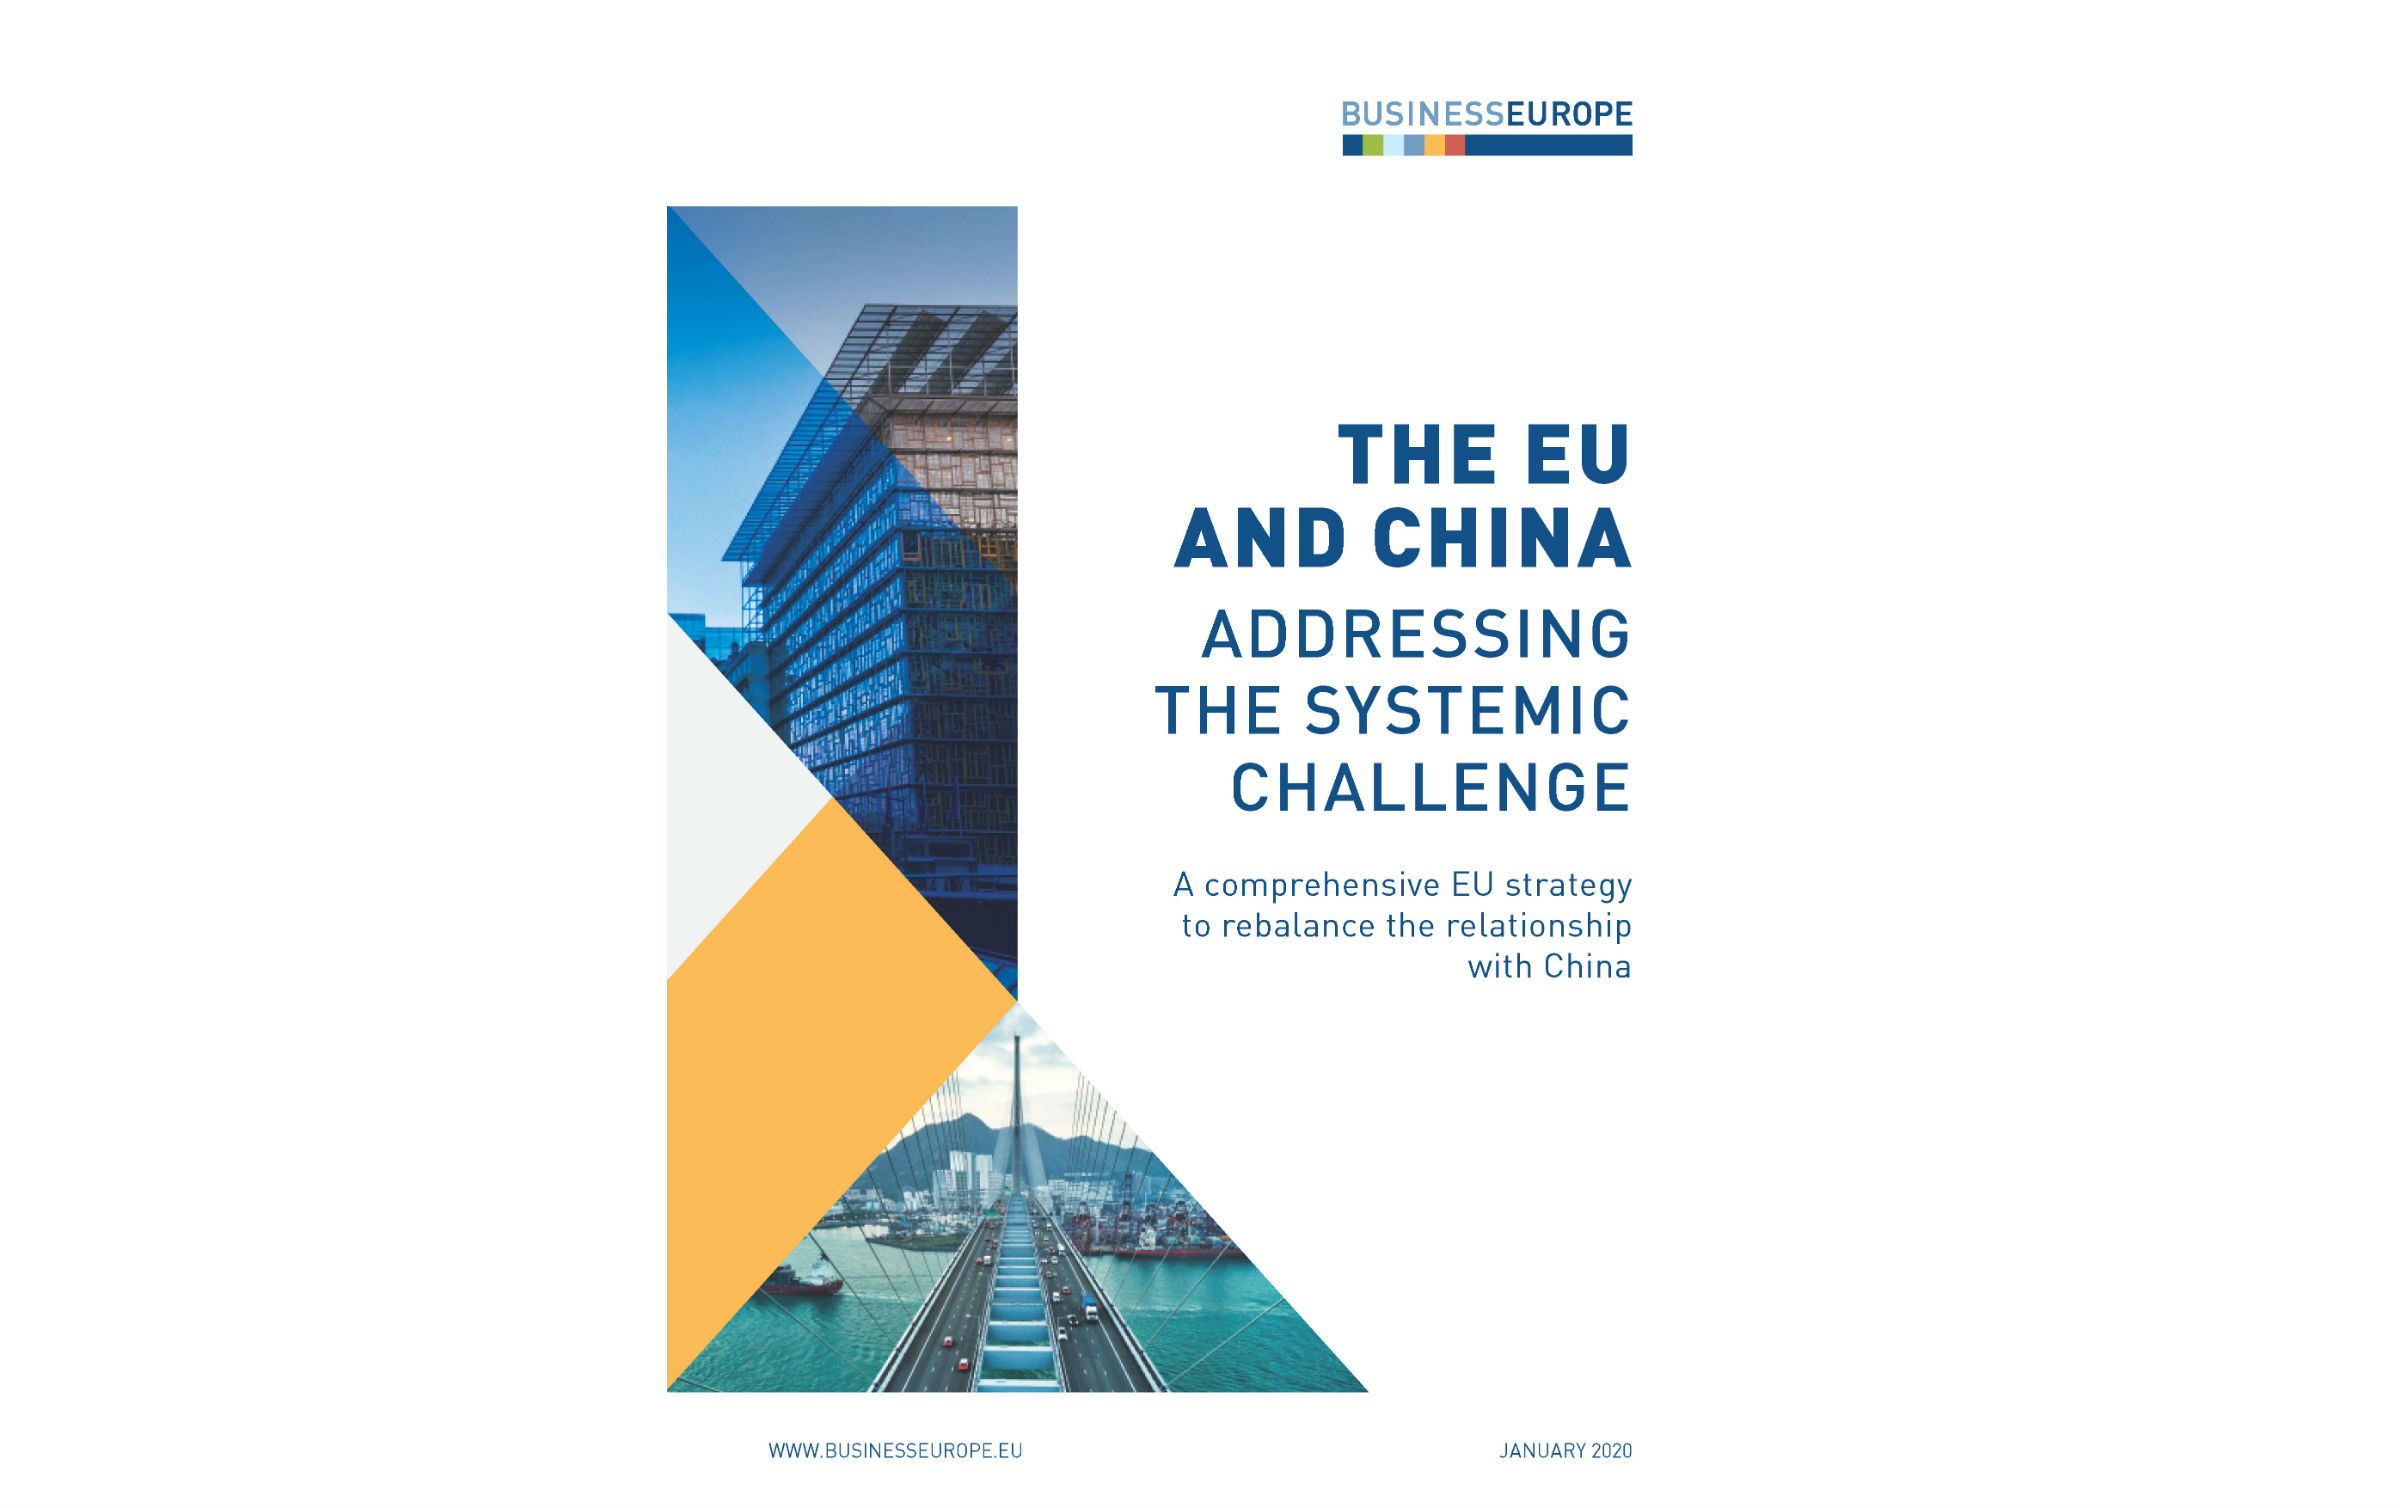 BusinessEurope: EU should fundamentally rebalance its relationship with China